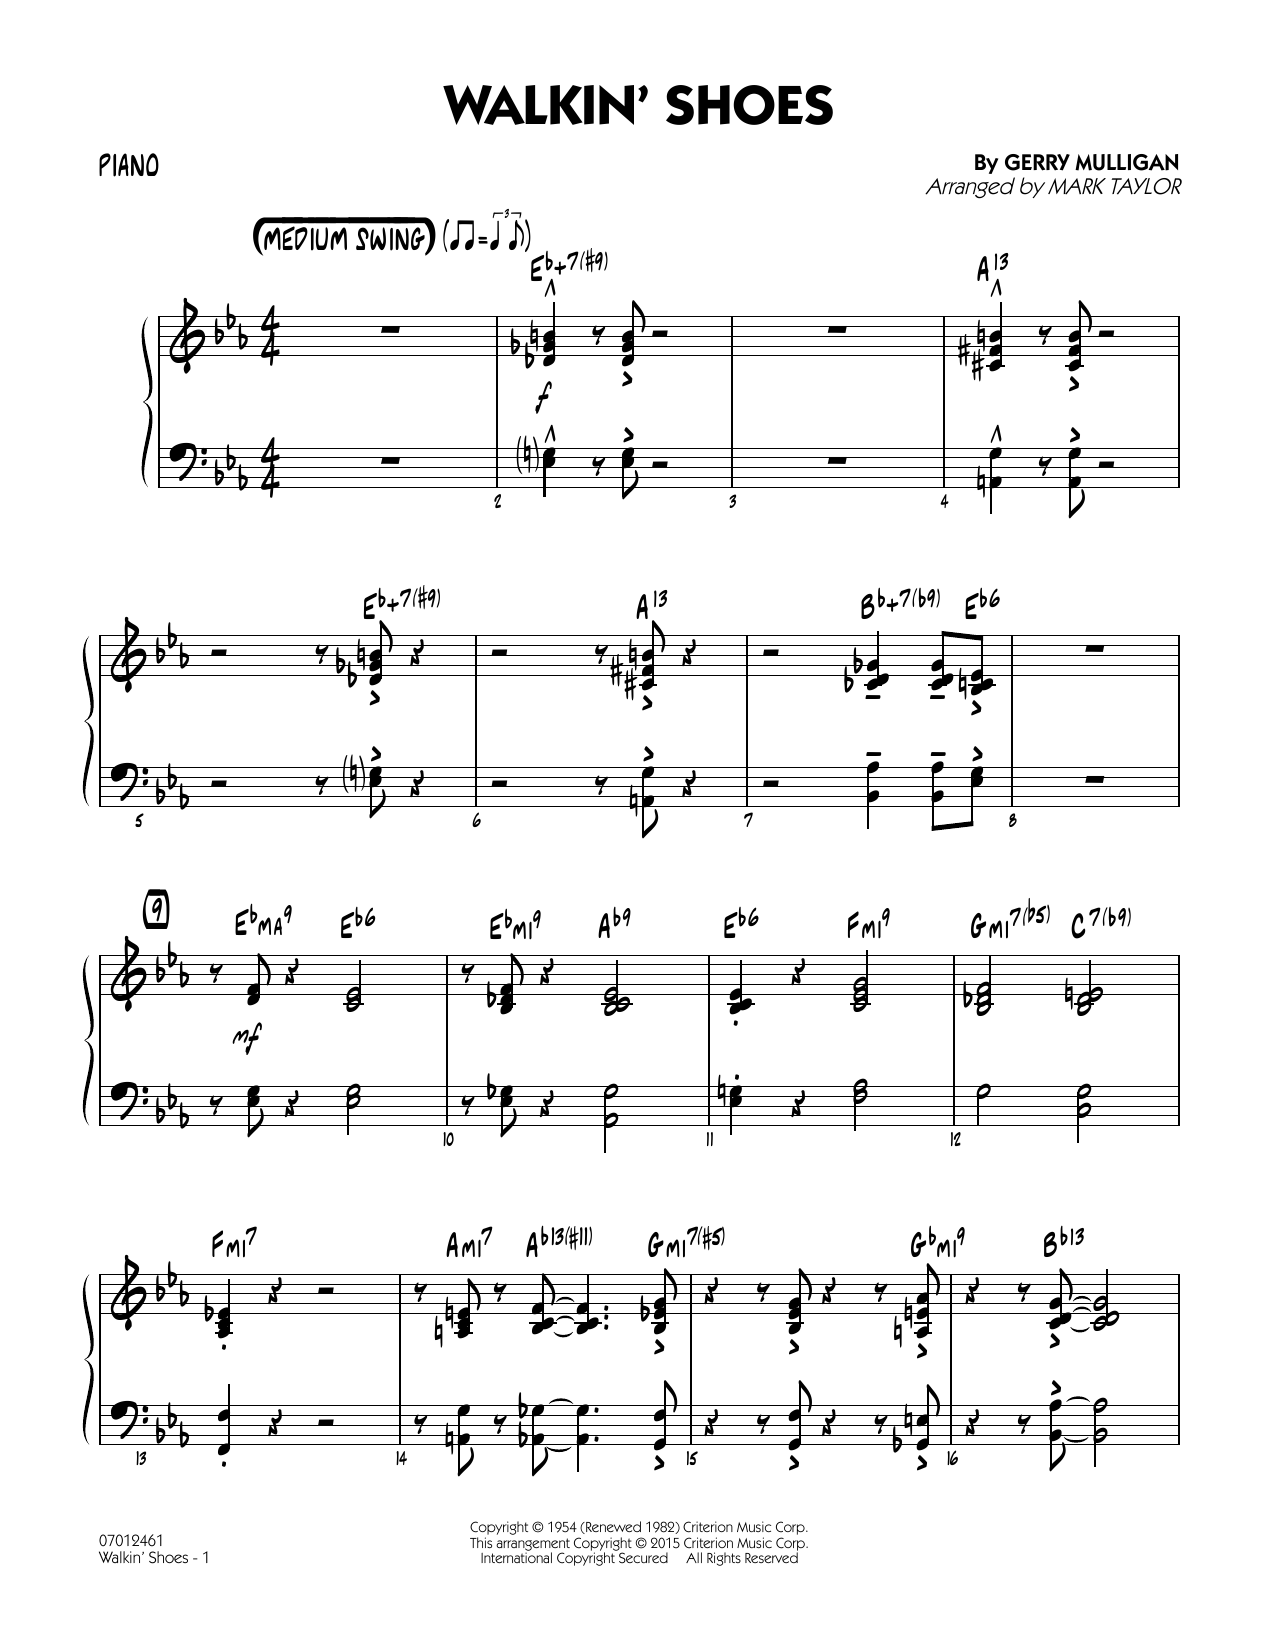 Mark Taylor Walkin' Shoes - Piano sheet music notes and chords. Download Printable PDF.